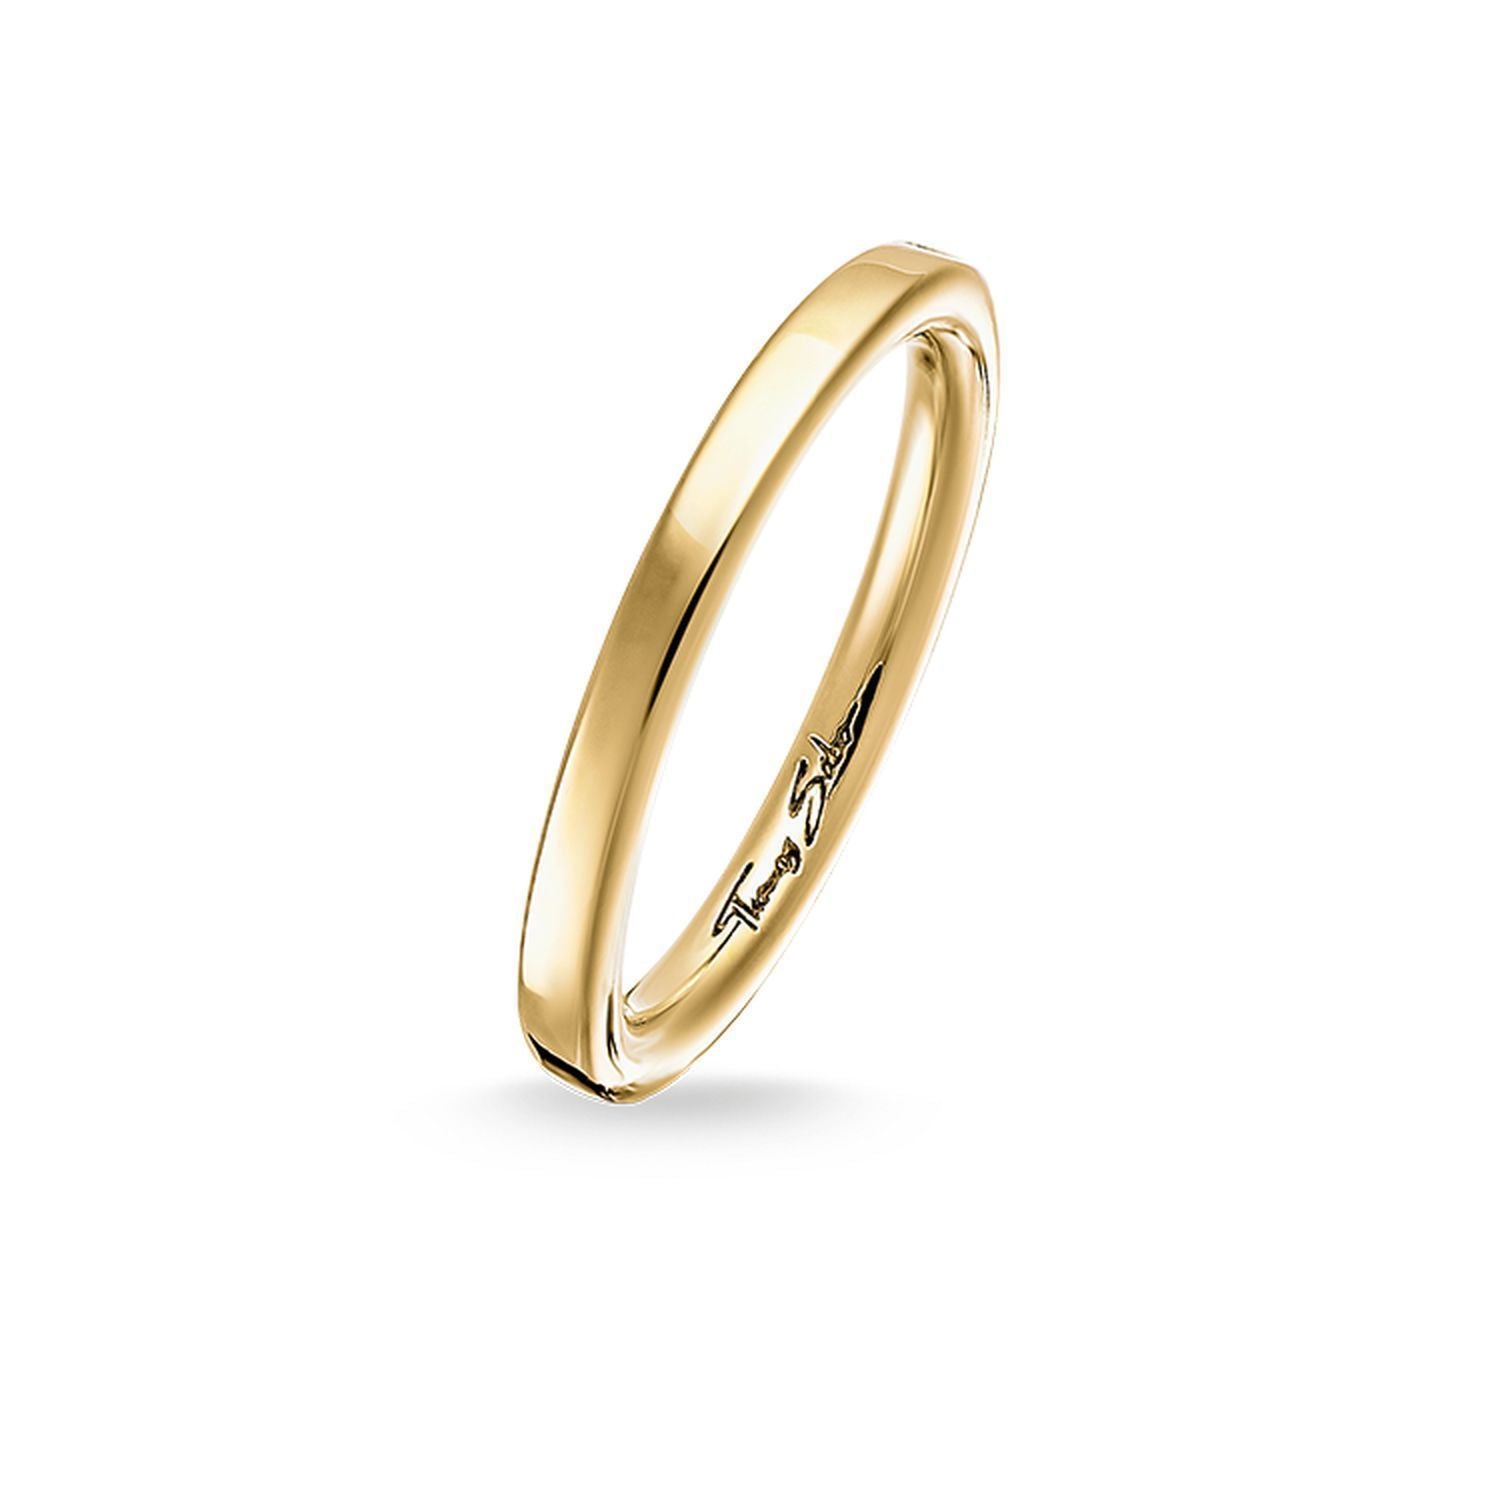 Thomas Sabo Gold Plated Sleek Polished Ring